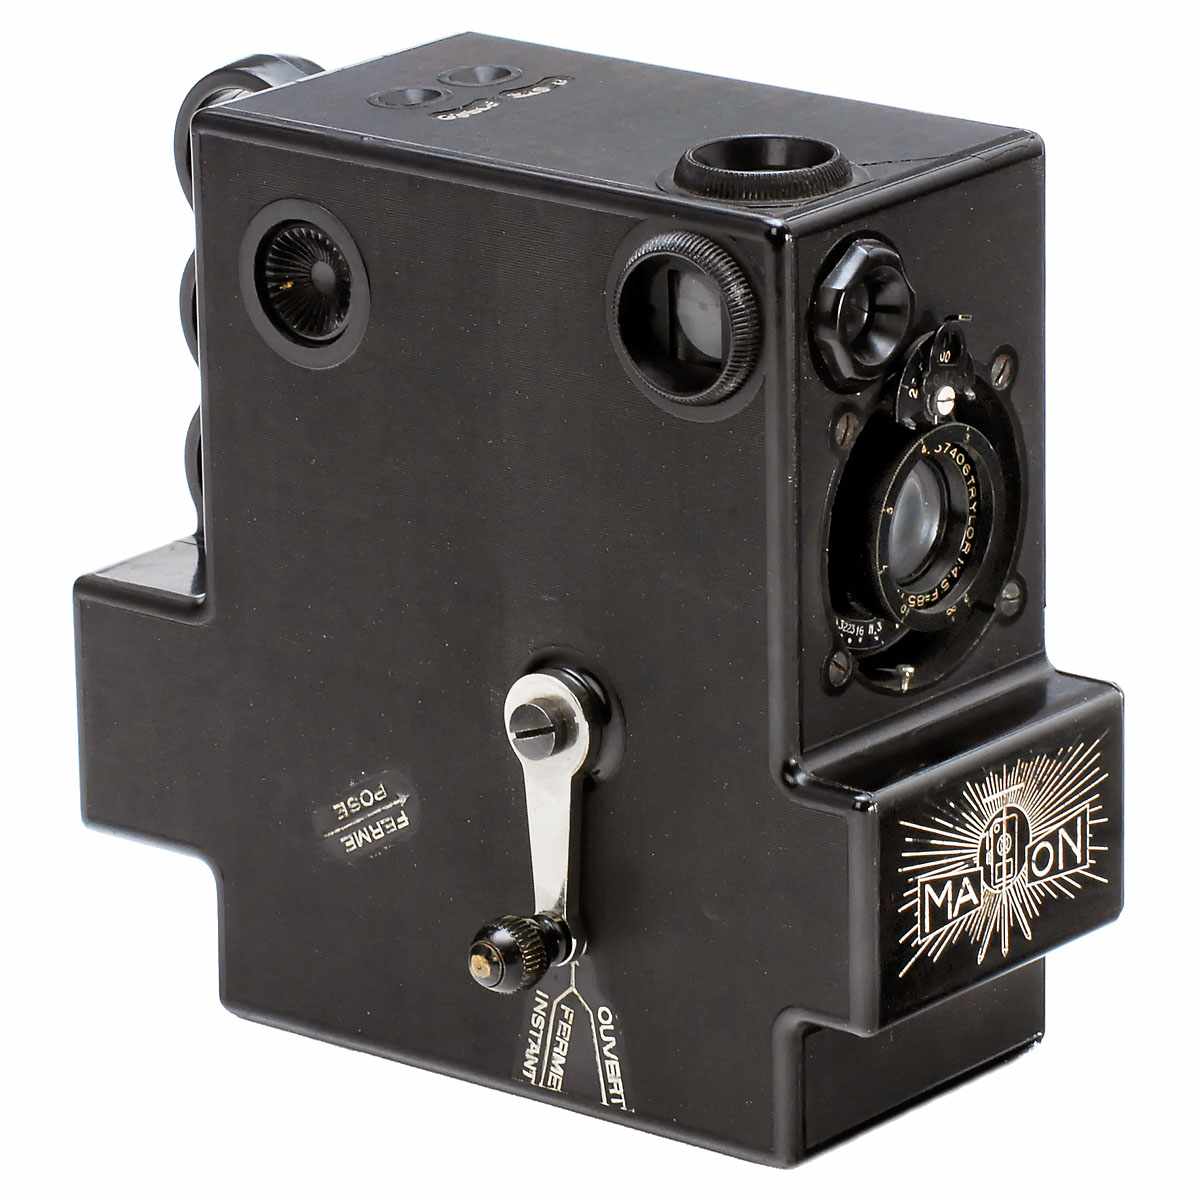 Bakelite Camera "Maton", c. 1930 Multipose Portable Cameras, Ltd., France. Brown bakelite camera,